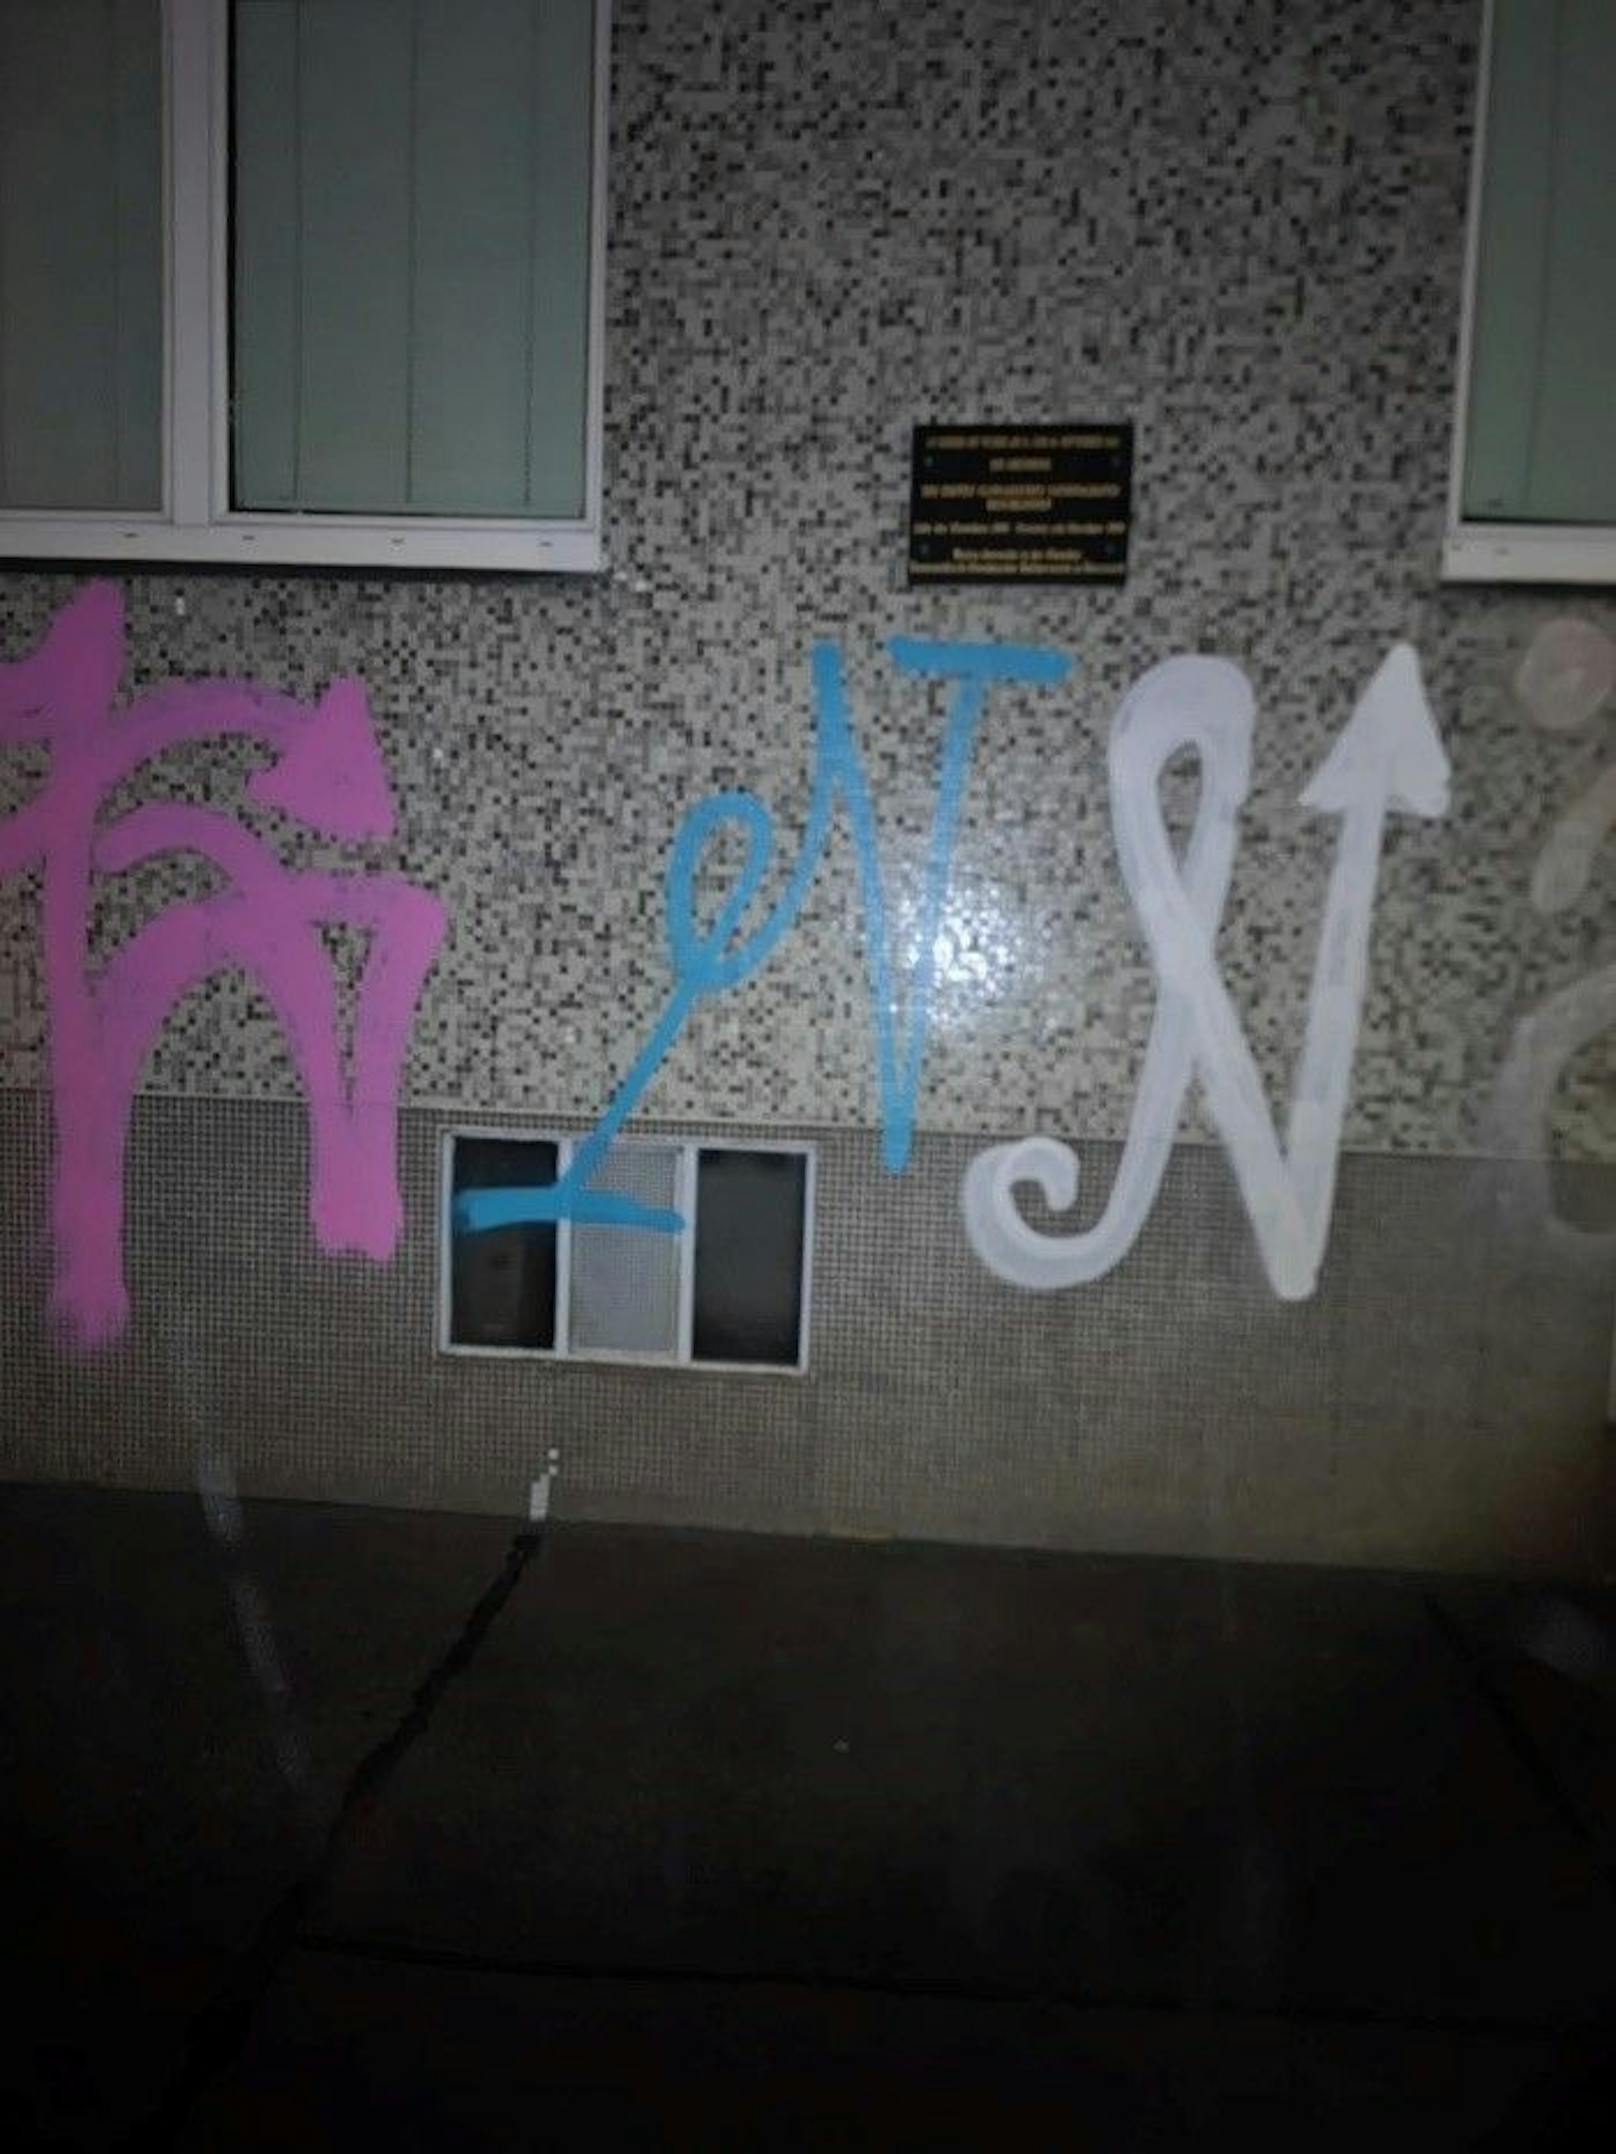 Graffiti-Attacke in Wien – Polizei stoppt Sprayer-Duo